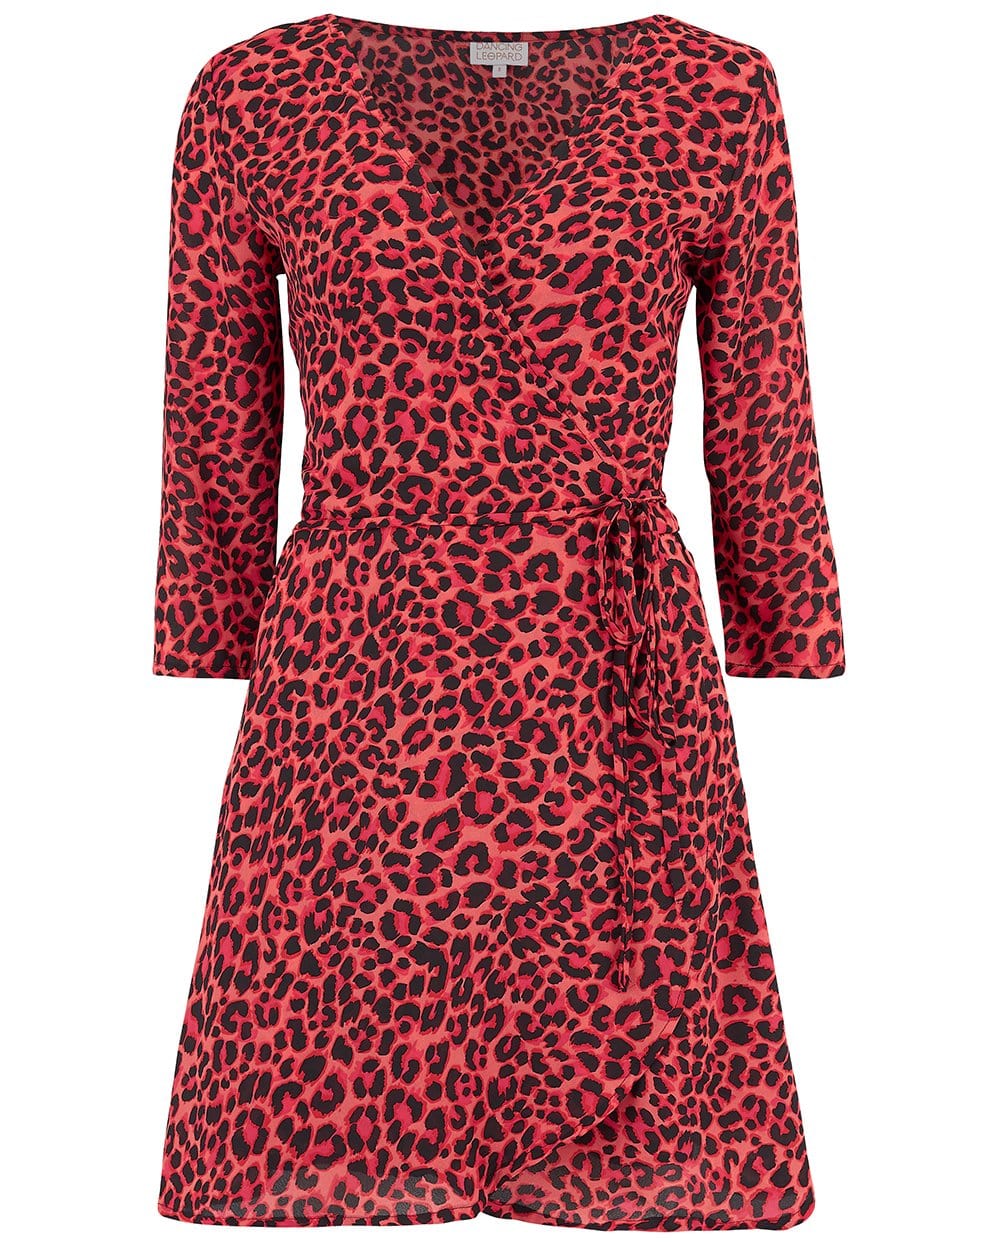 dancing leopard red dress